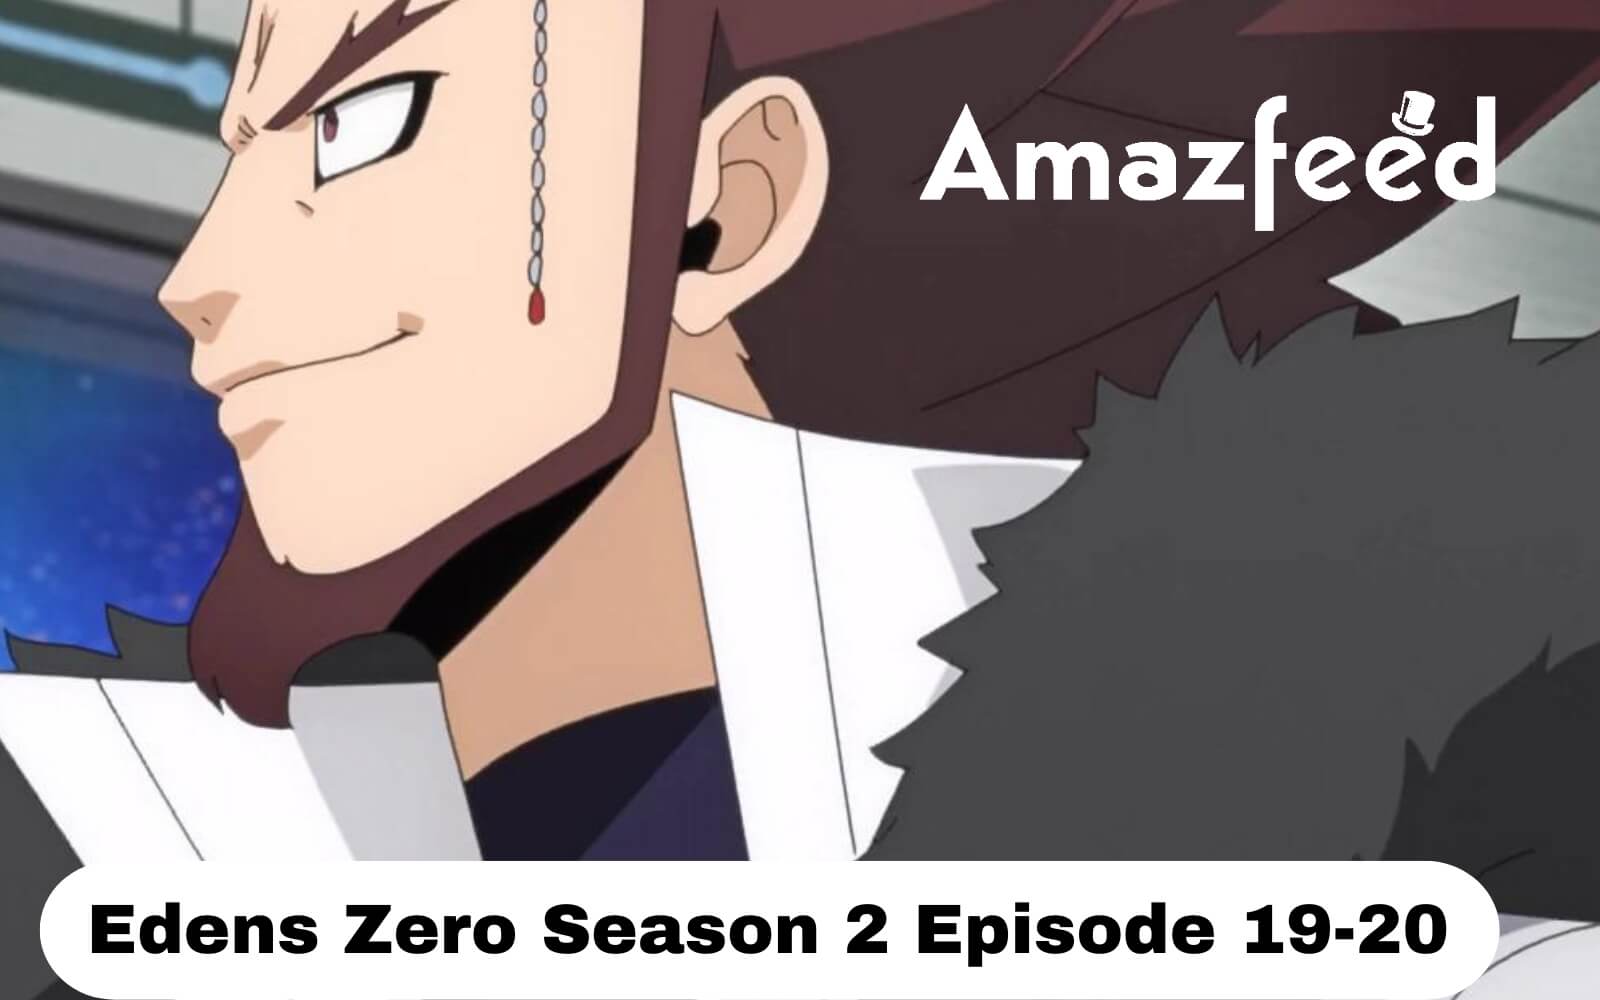 Edens Zero season 2 episode 9: Release date and time, where to